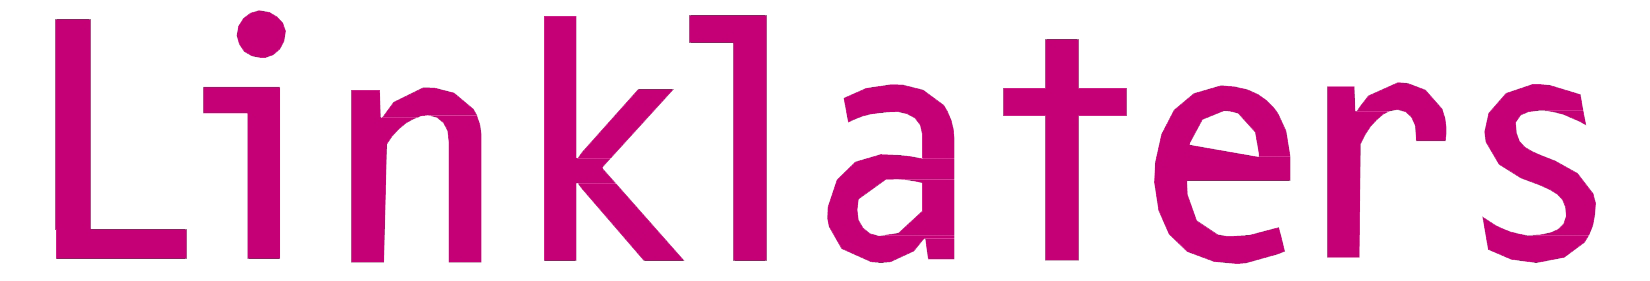 Linklaters logo